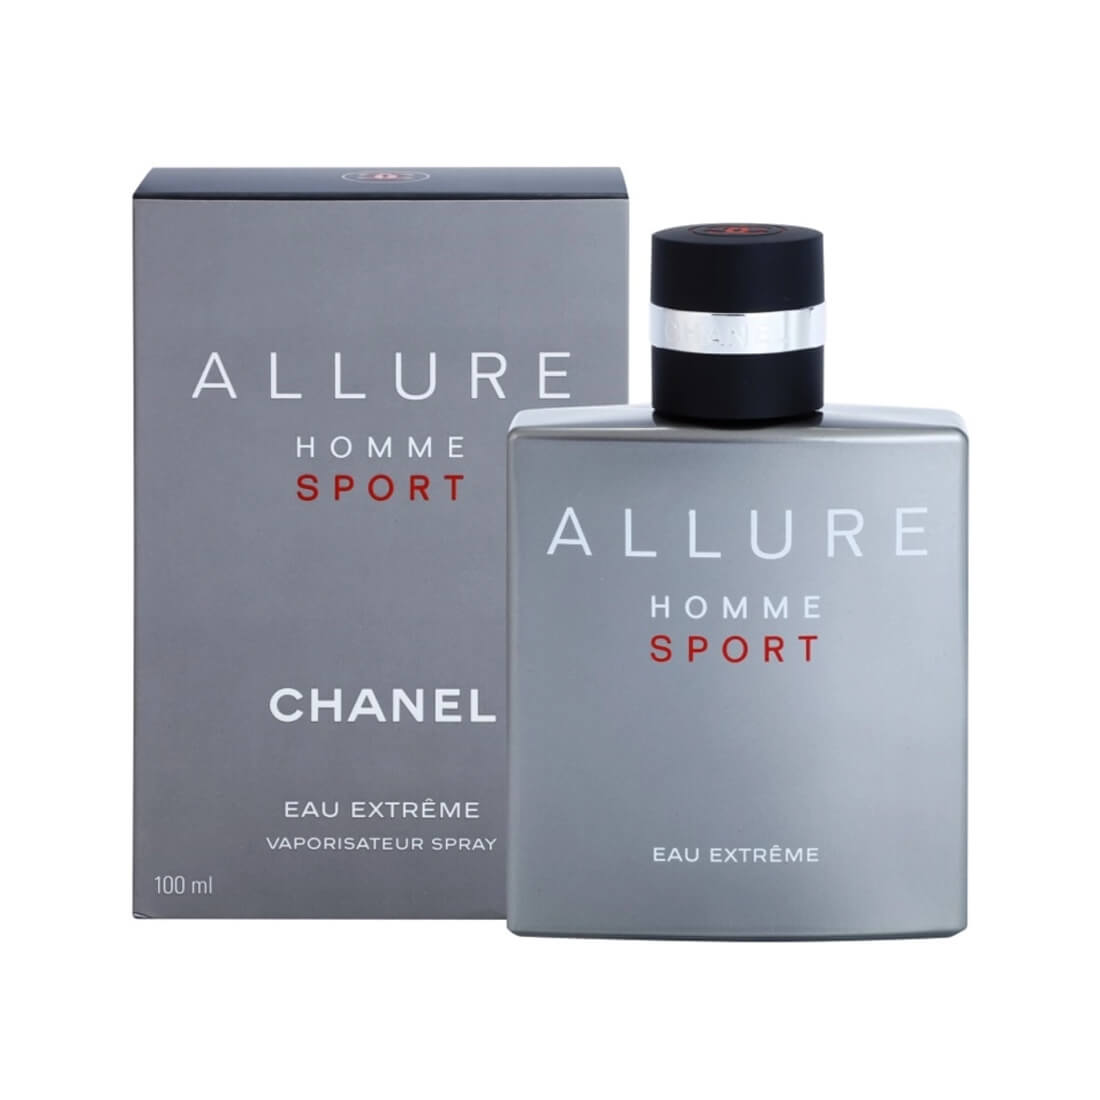 Allure Homme Sport Men's Fragrances for sale